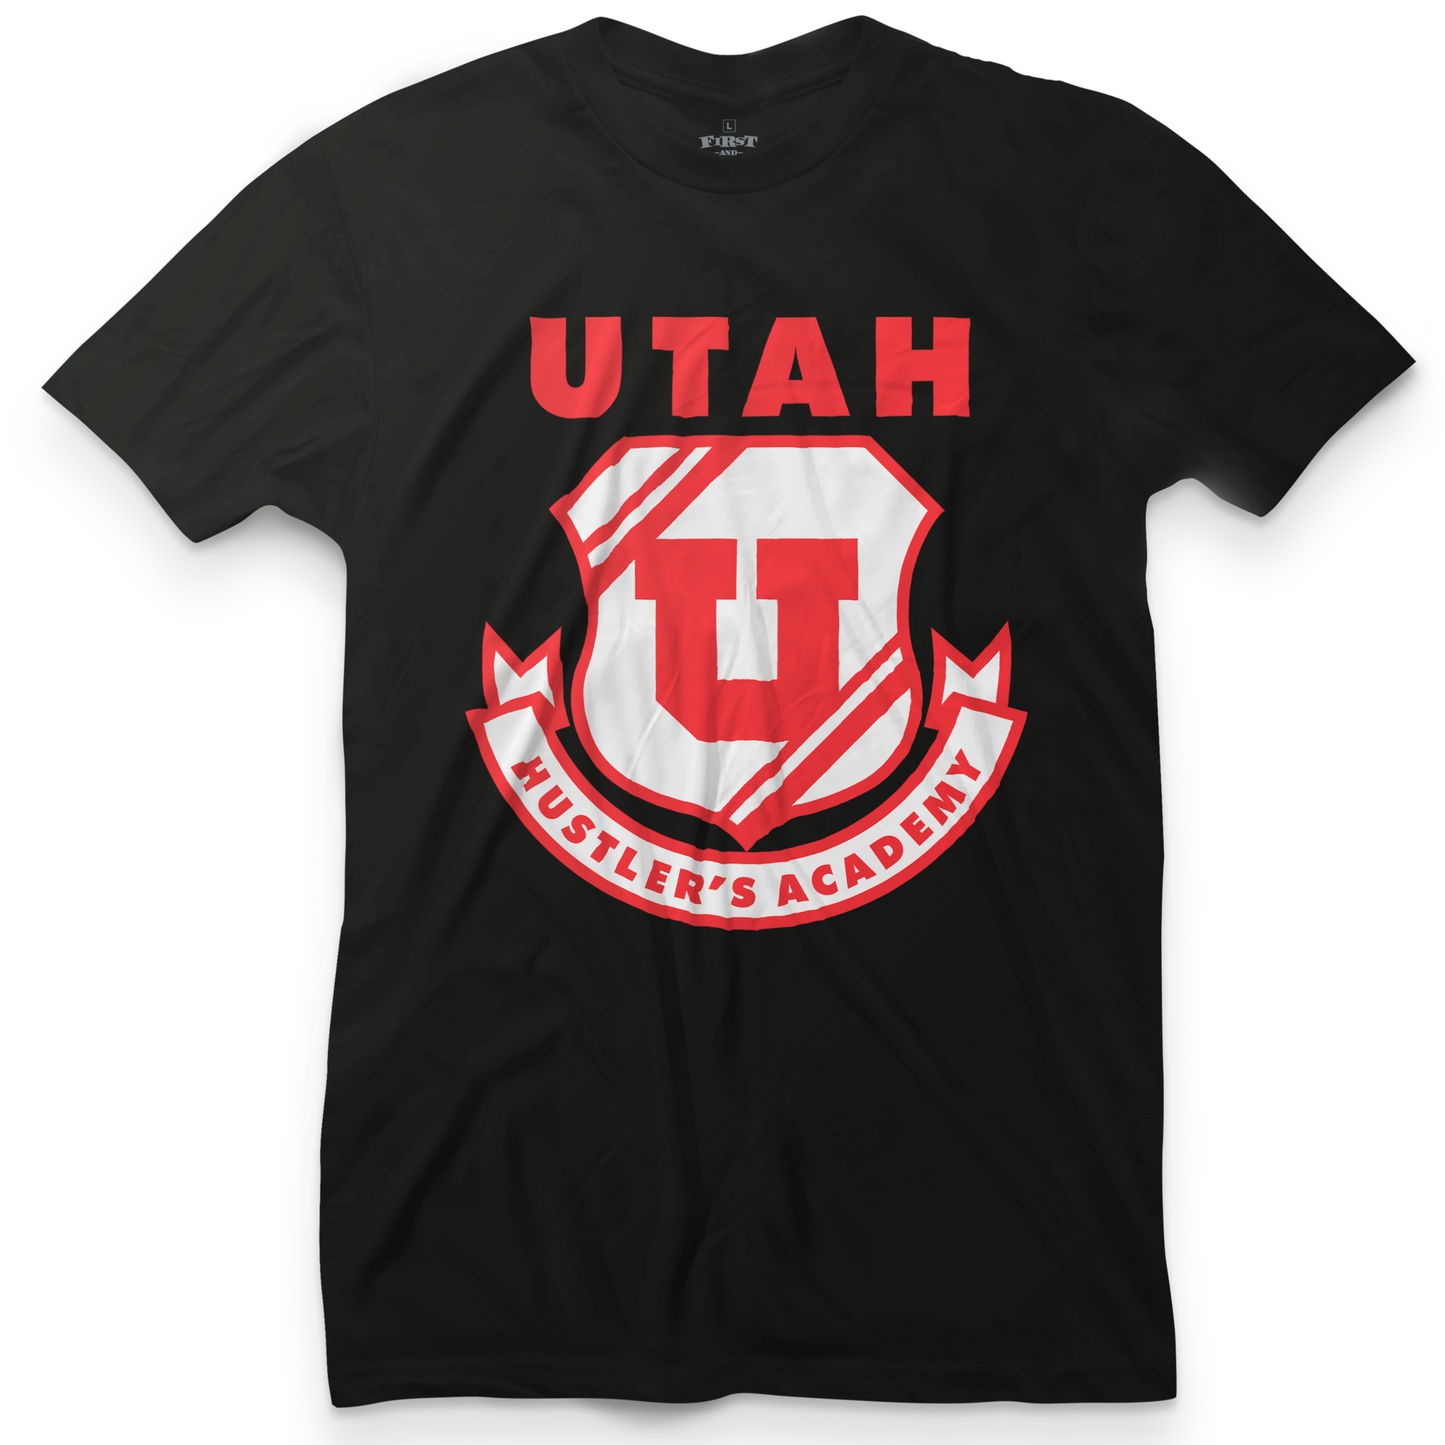 Utah Hustler's Academy Tee